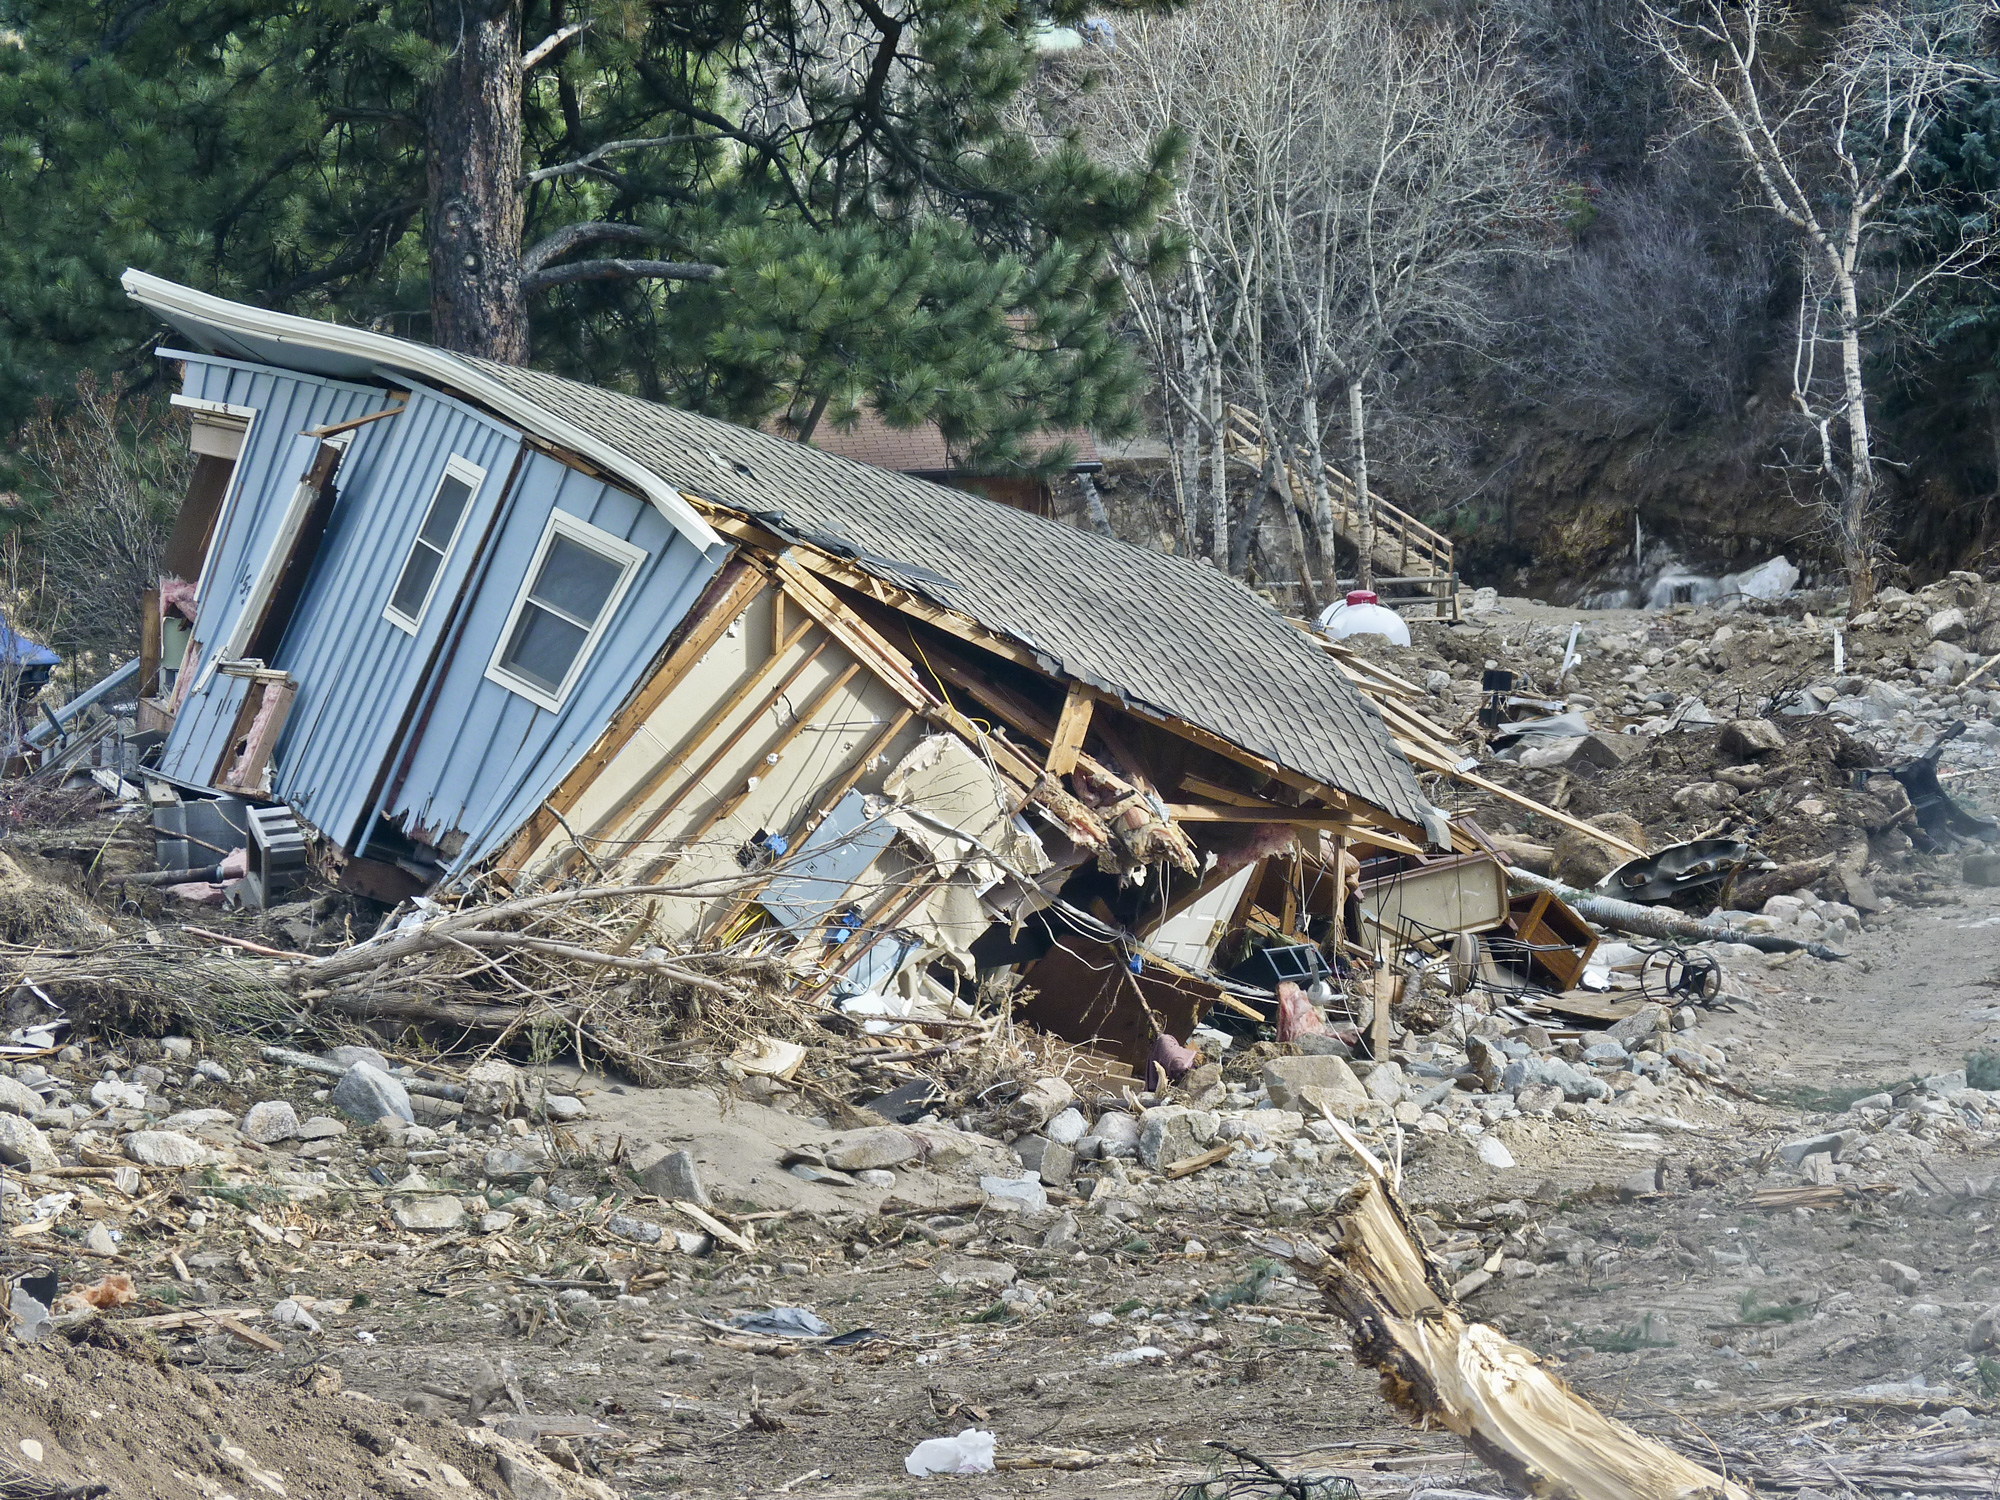 Debris flow damage in Jamestown, Colorado, November 2013. Photo credit: Jonathan White for the CGS.